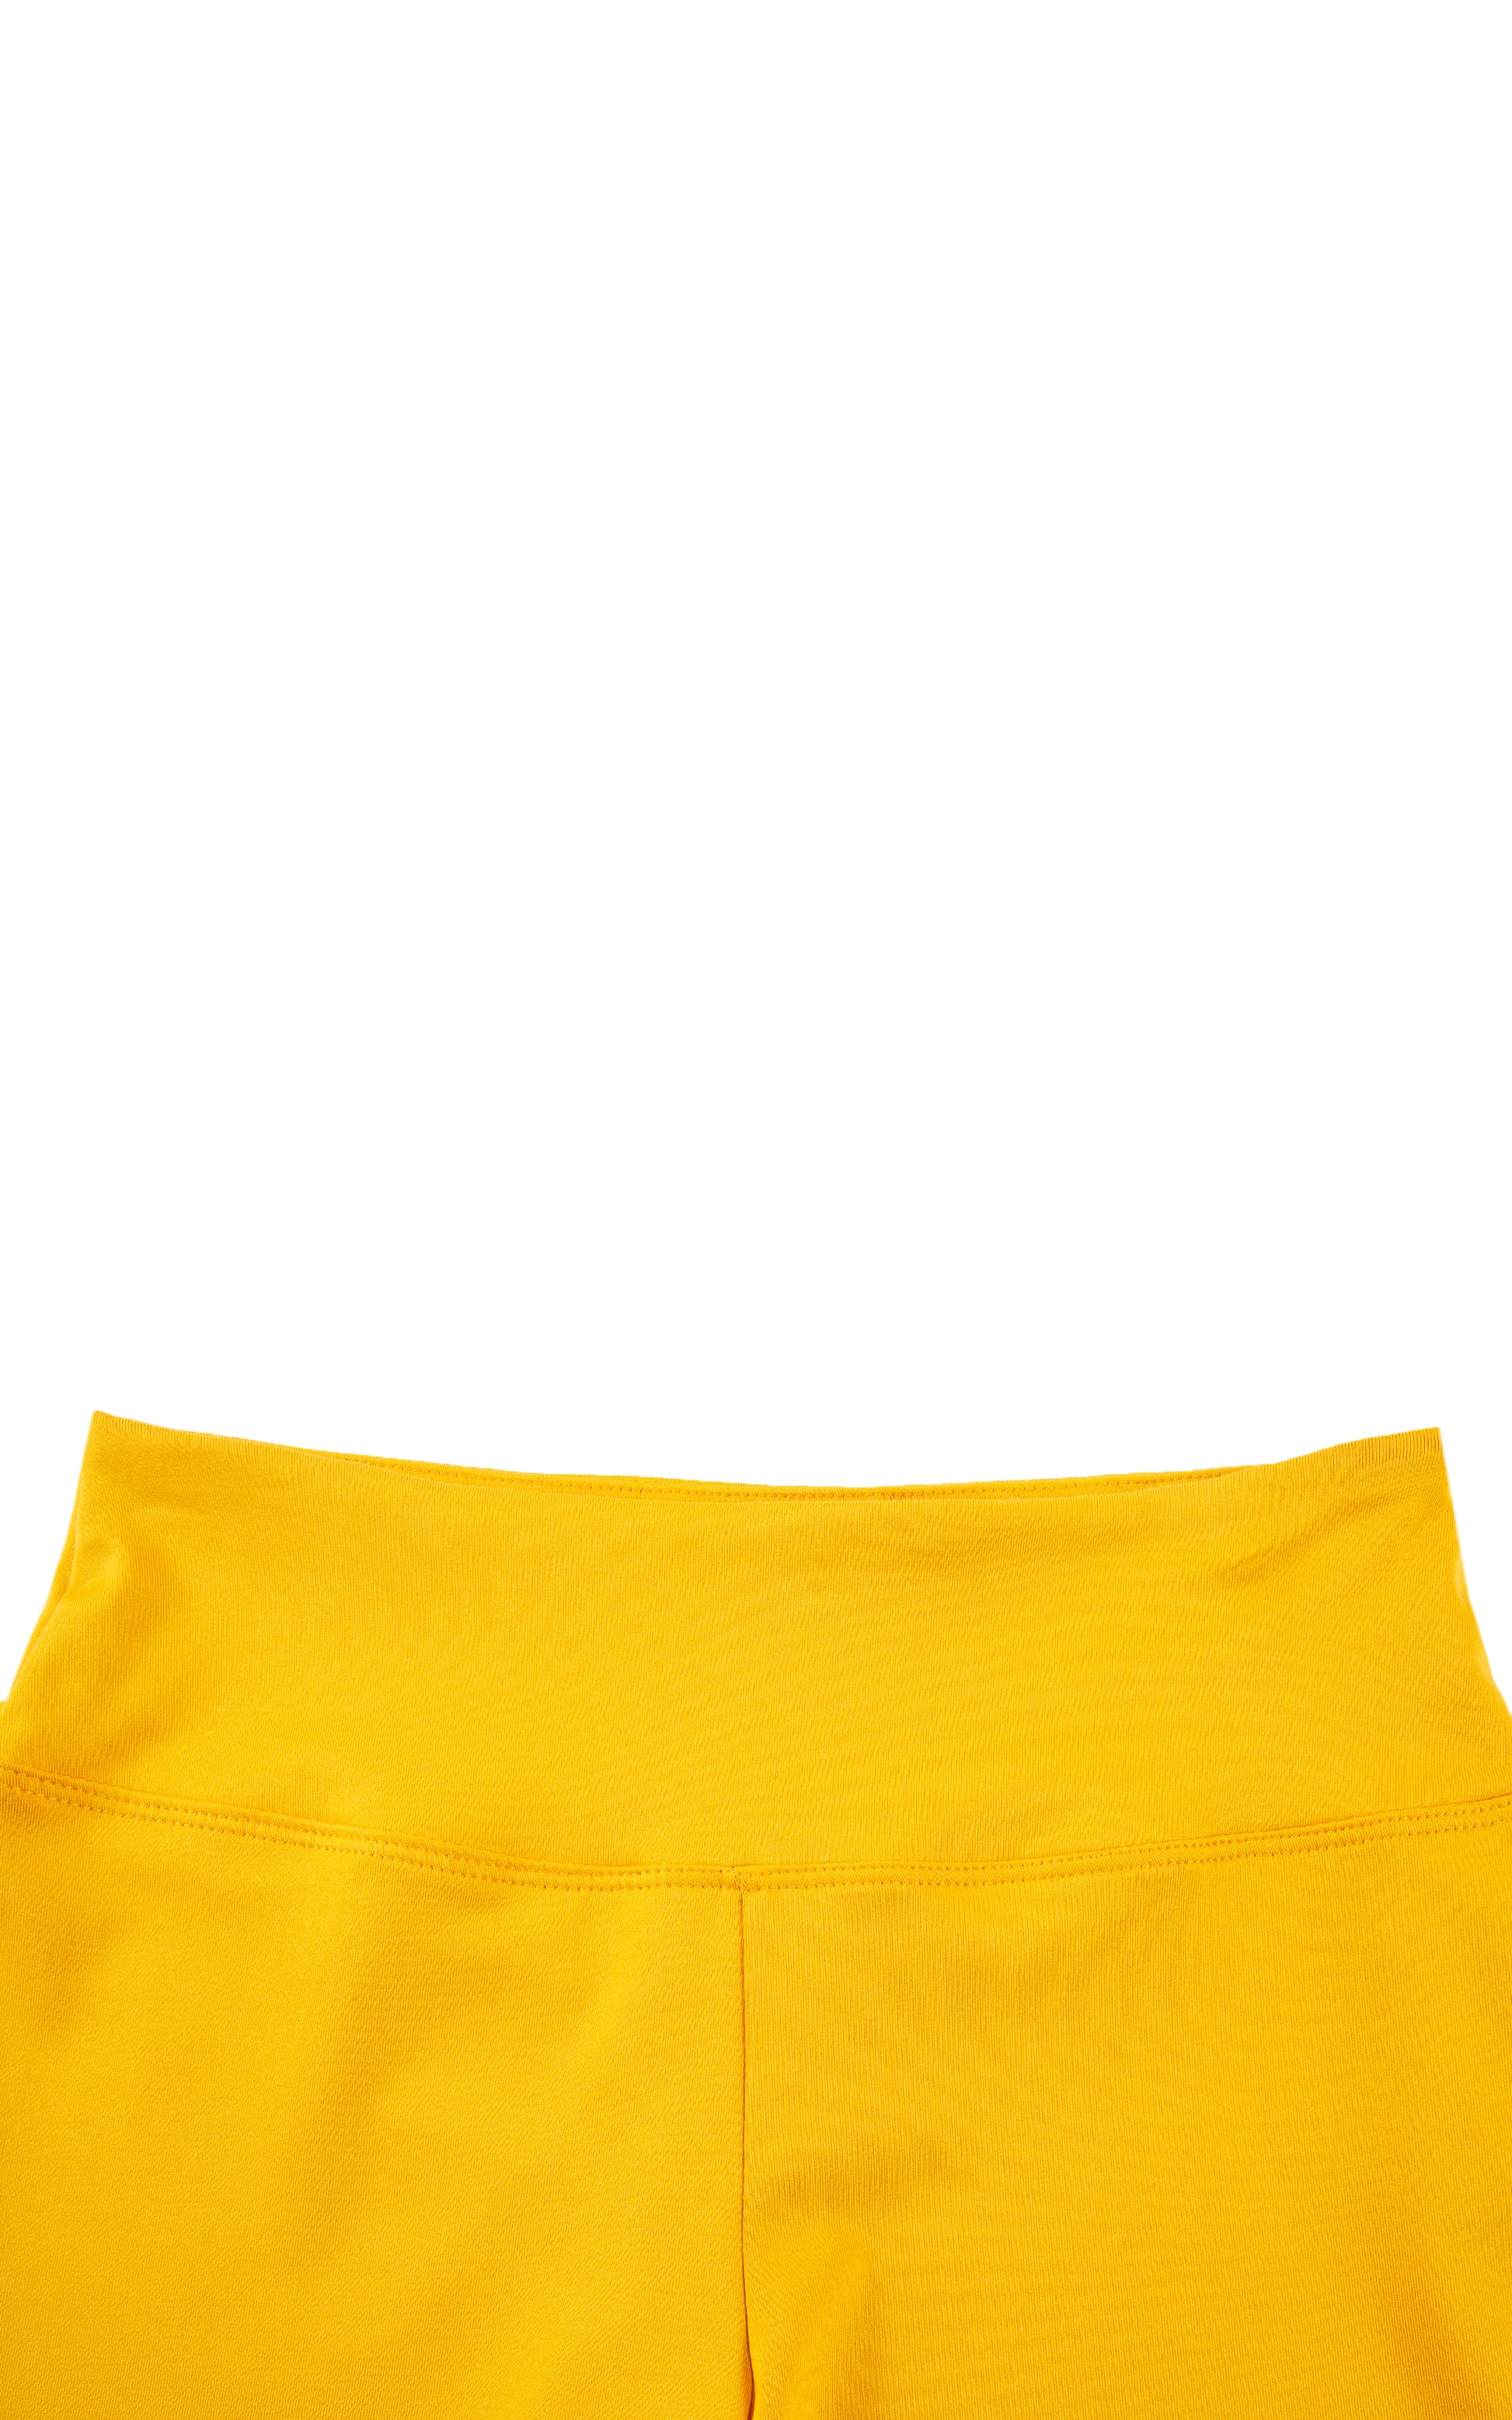 Close up of yellow short waistband.